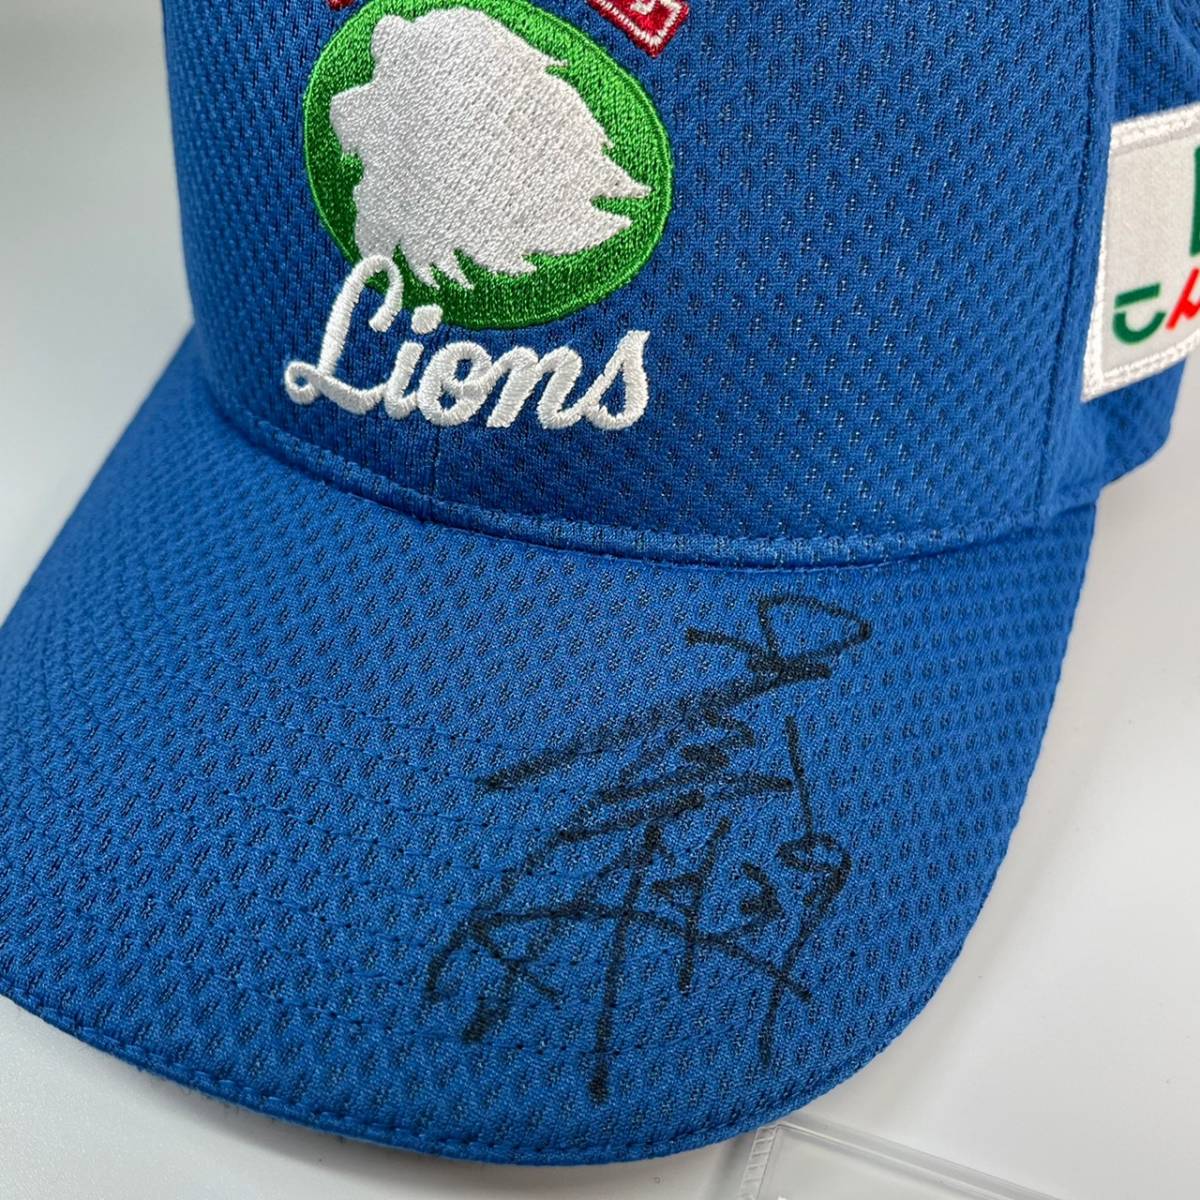 [ charity ] Saitama Seibu Lions .. garden player SAVE LIONS DAY cap ( with autograph )